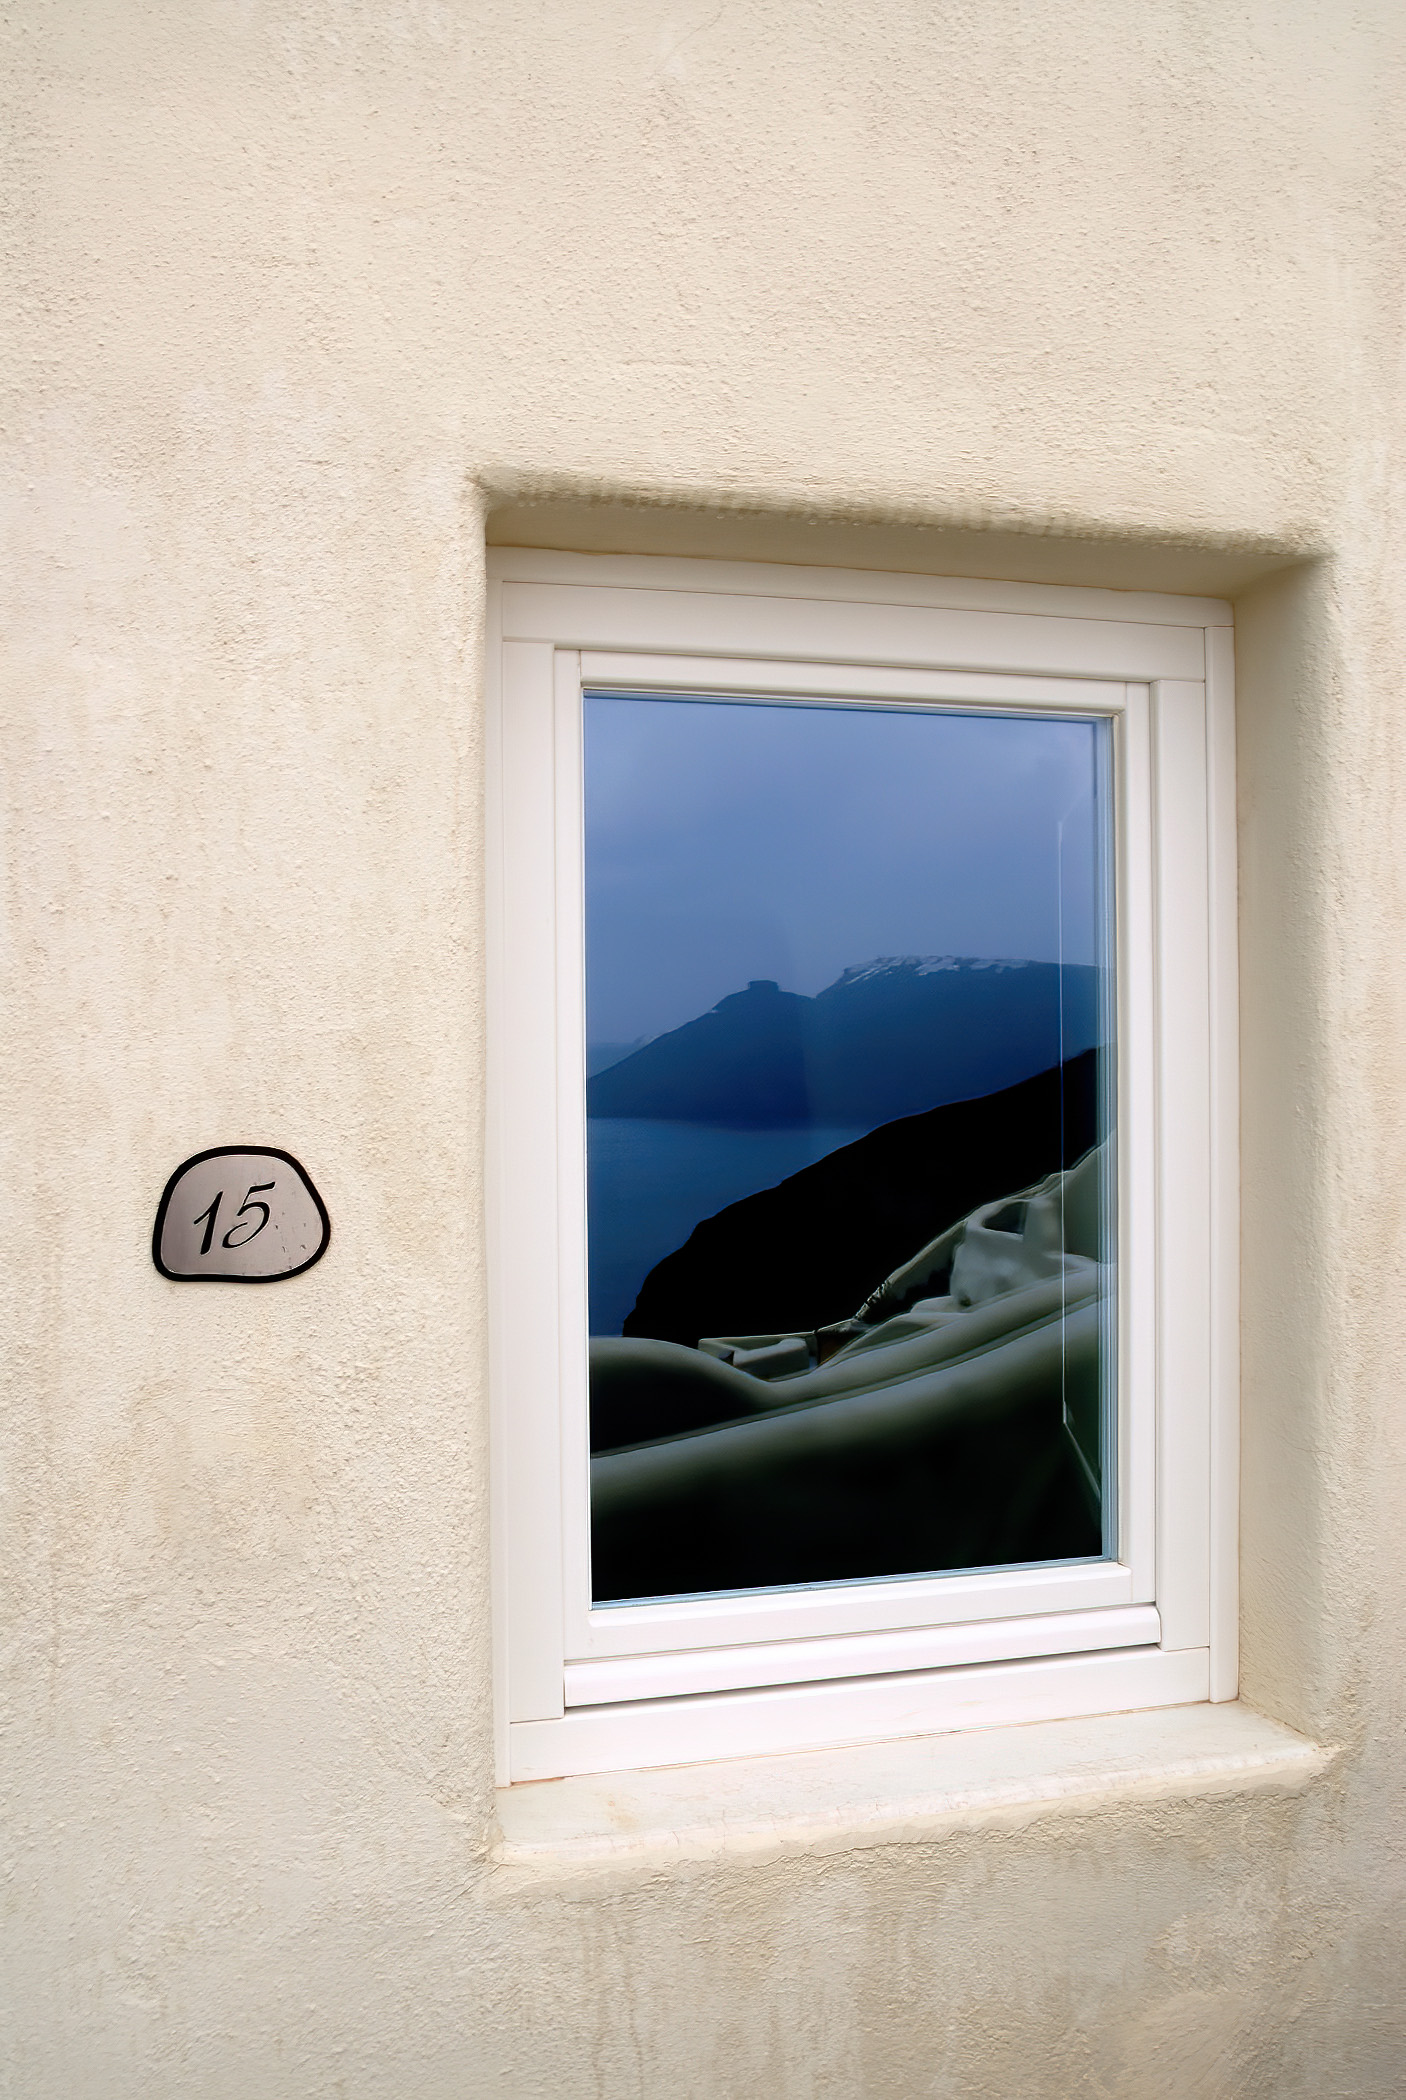 Mystique Hotel Santorini – Oia, Santorini Island, Greece – Room Exterior Window Ocean View Reflection